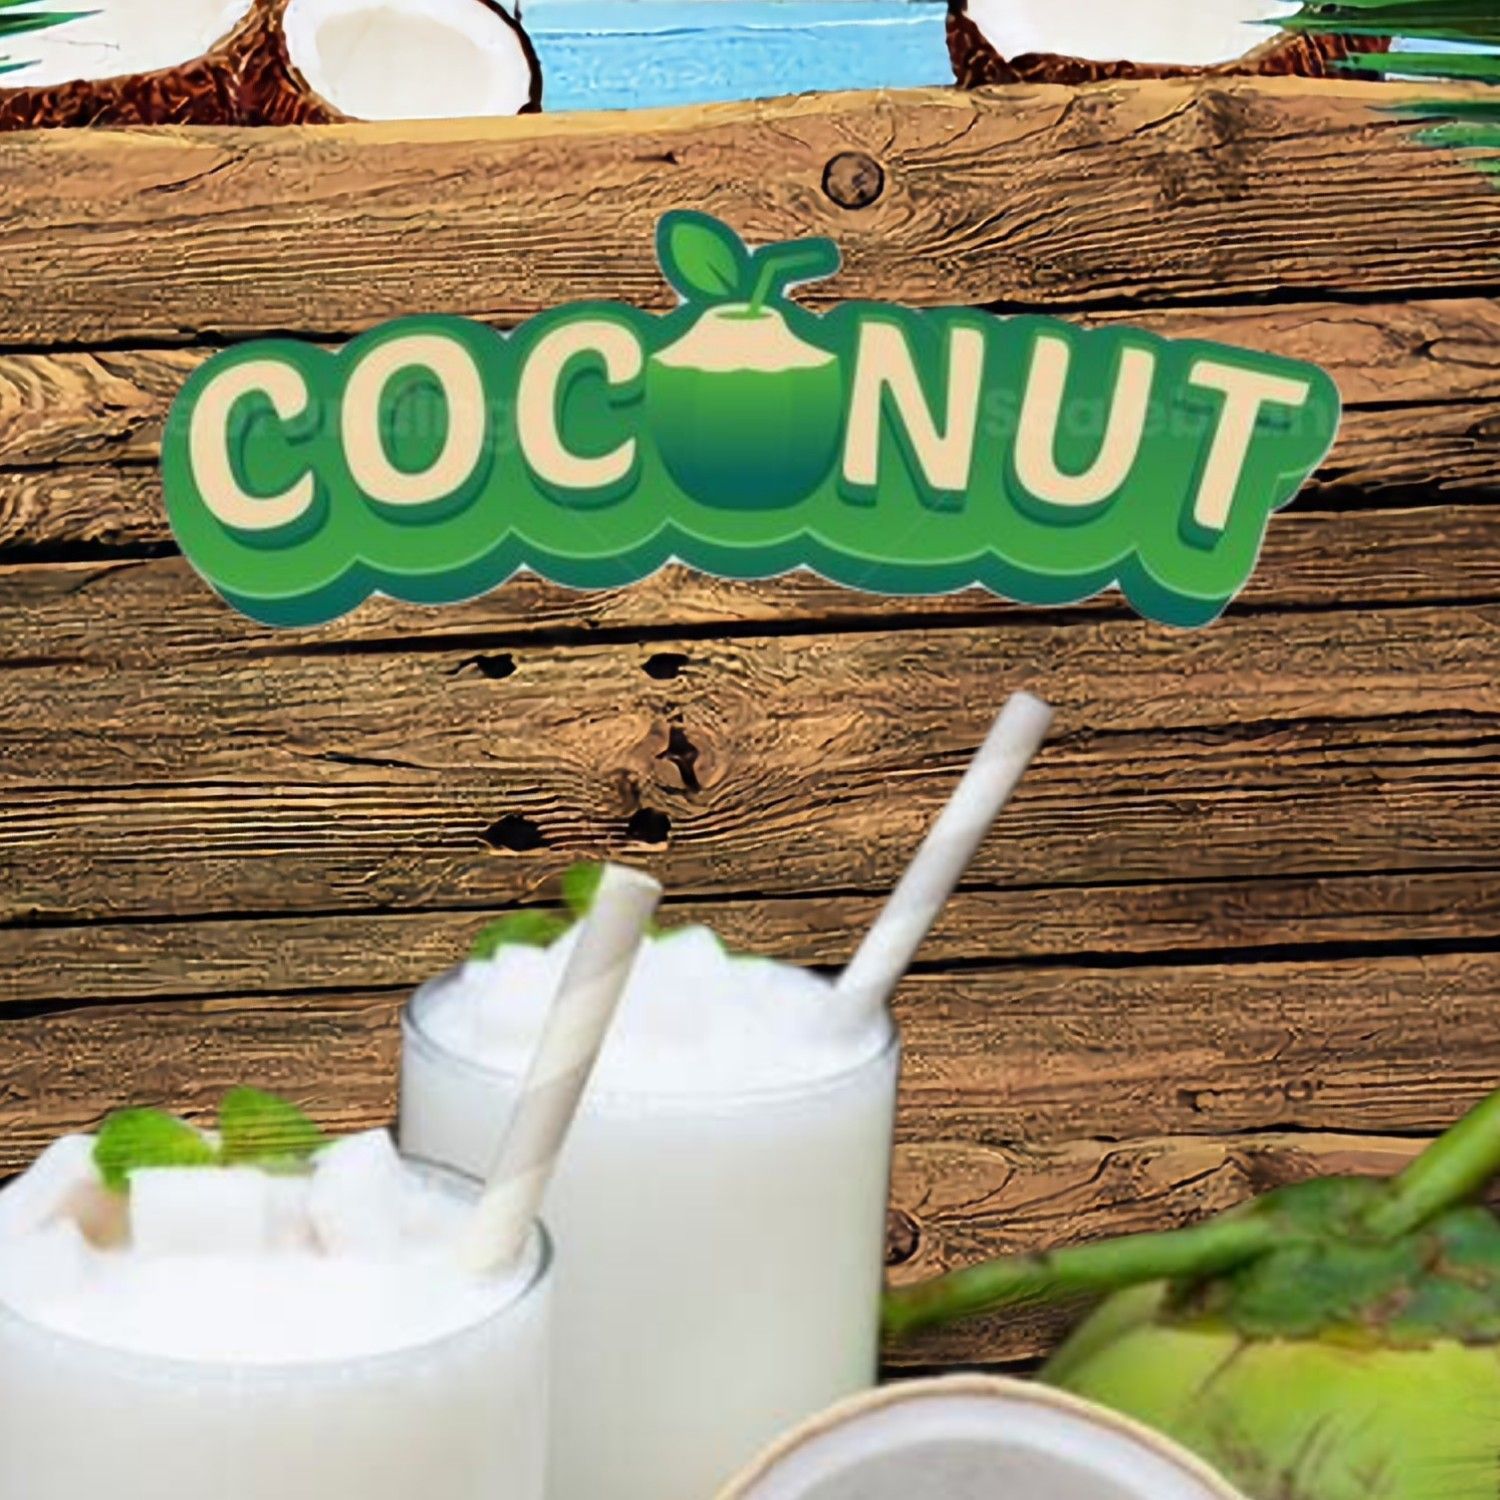 Coconut, 5737 NW 114th Path, Doral, 33178